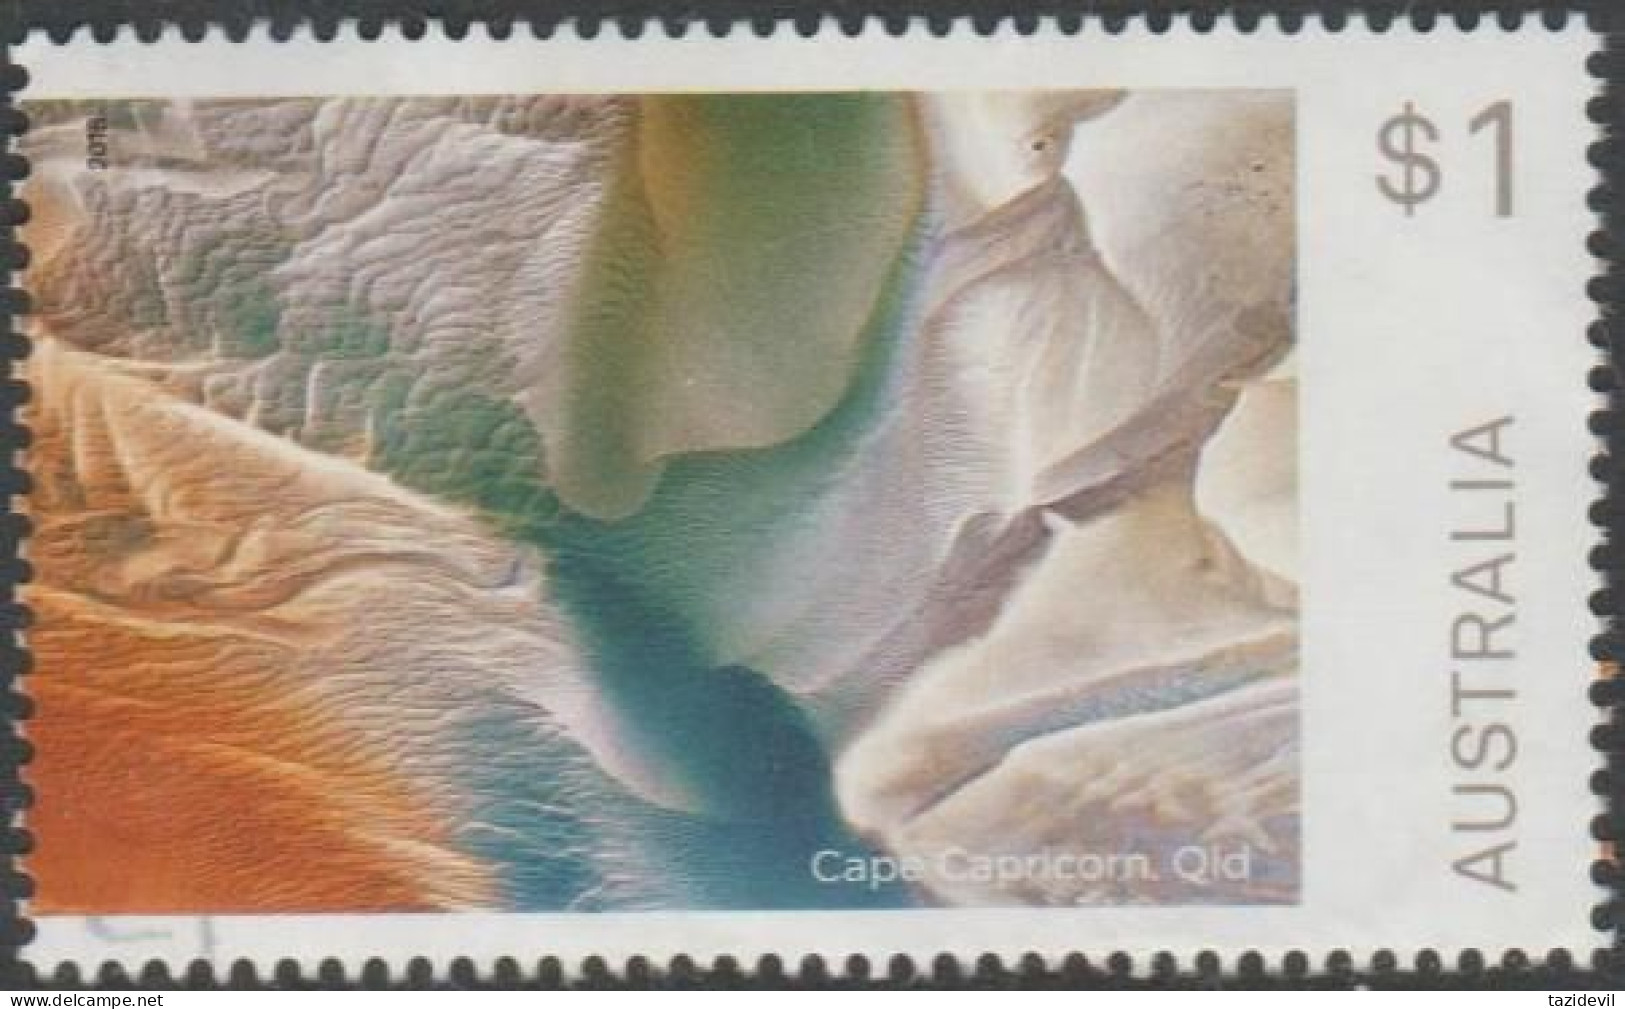 AUSTRALIA - USED 2018 $1.00 Art In Nature - Cape Capricorn, Queensland - Used Stamps